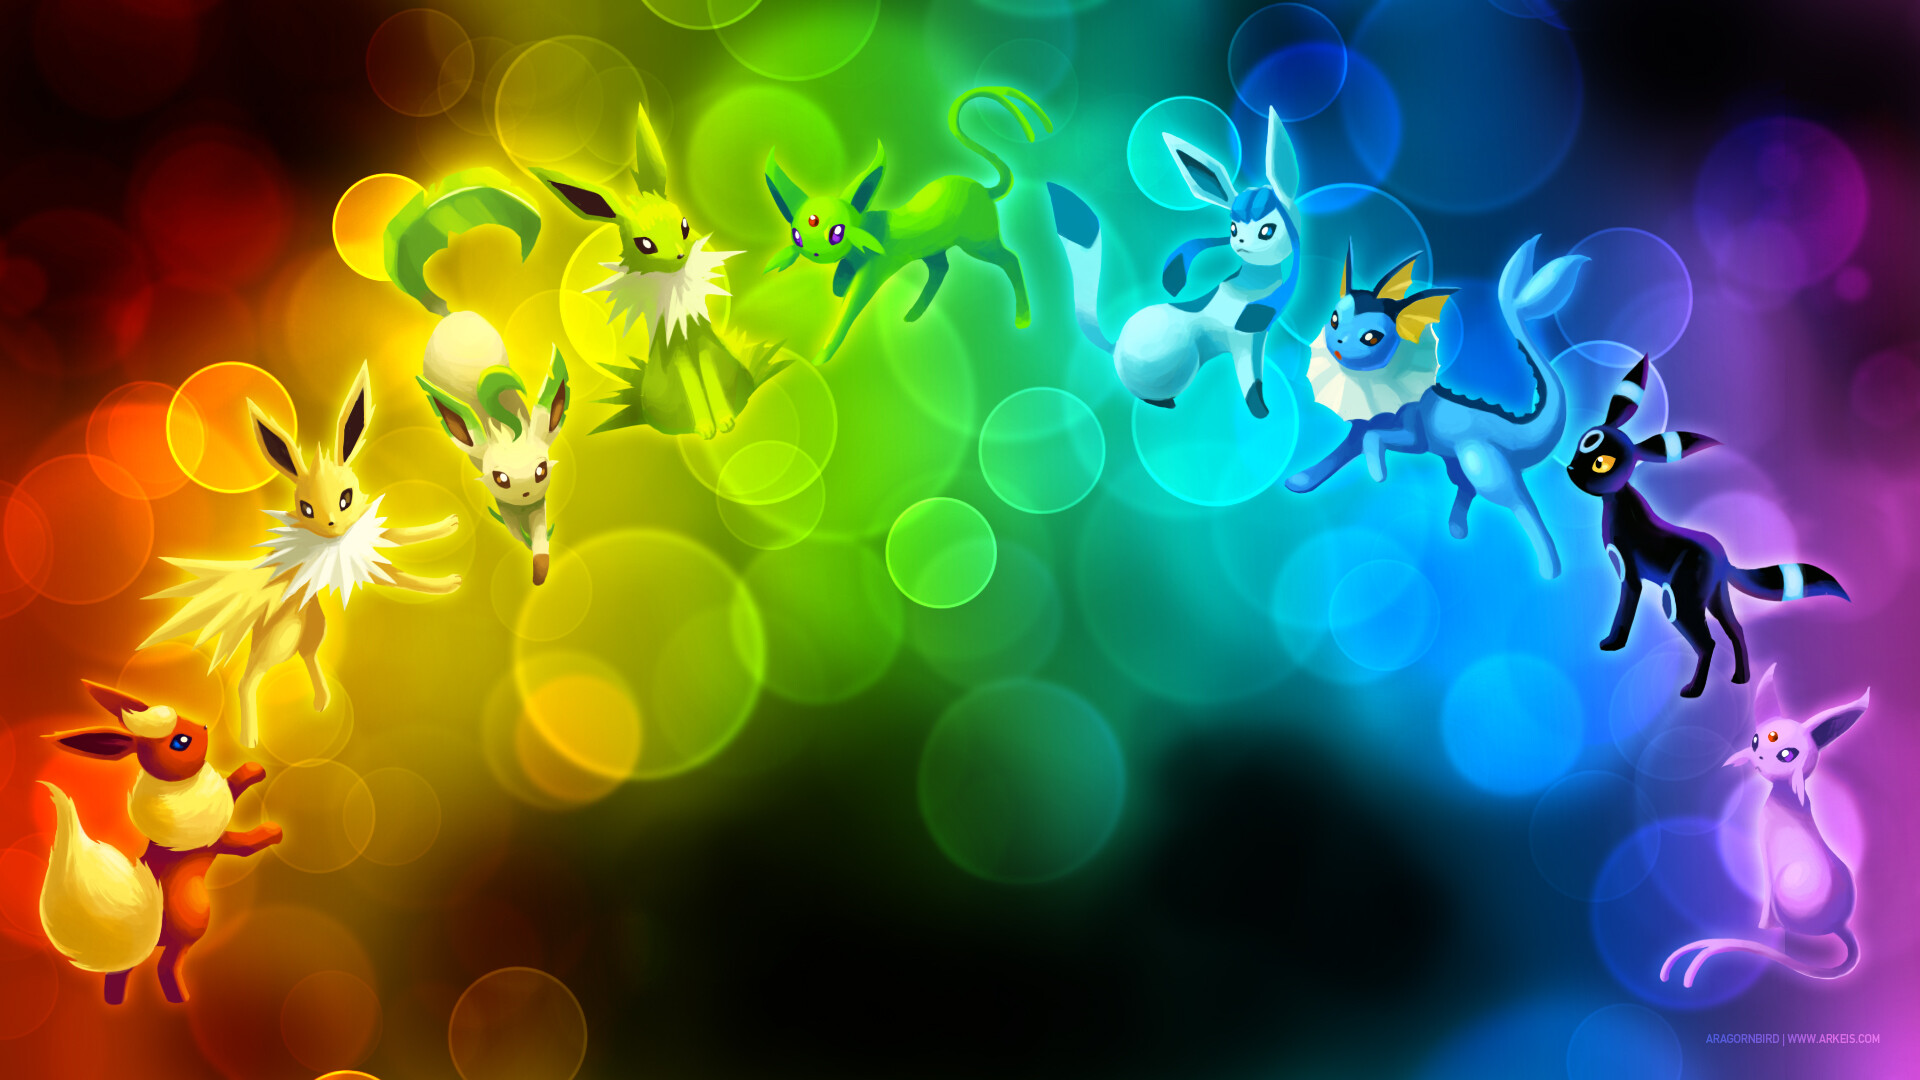 Glaceon: Rainbow, Evolutionary chain, Eevee, Quadruped mammalian Pokemon. 1920x1080 Full HD Background.